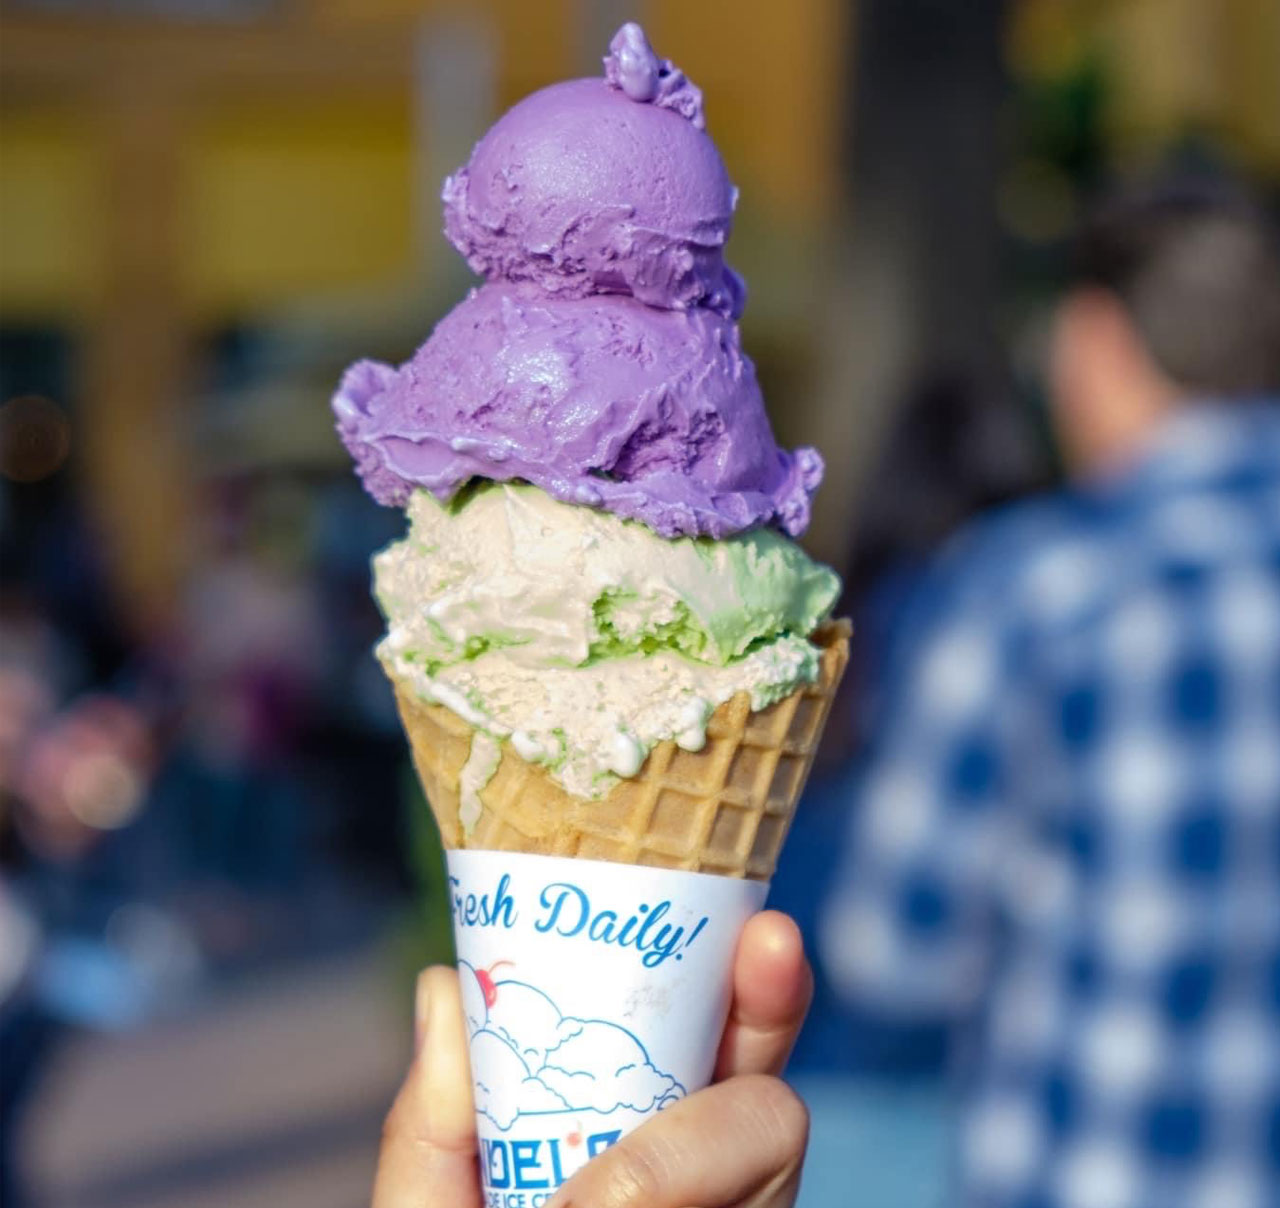 Enjoy $3 Ice Cream Tuesdays at Handel’s Ice Cream